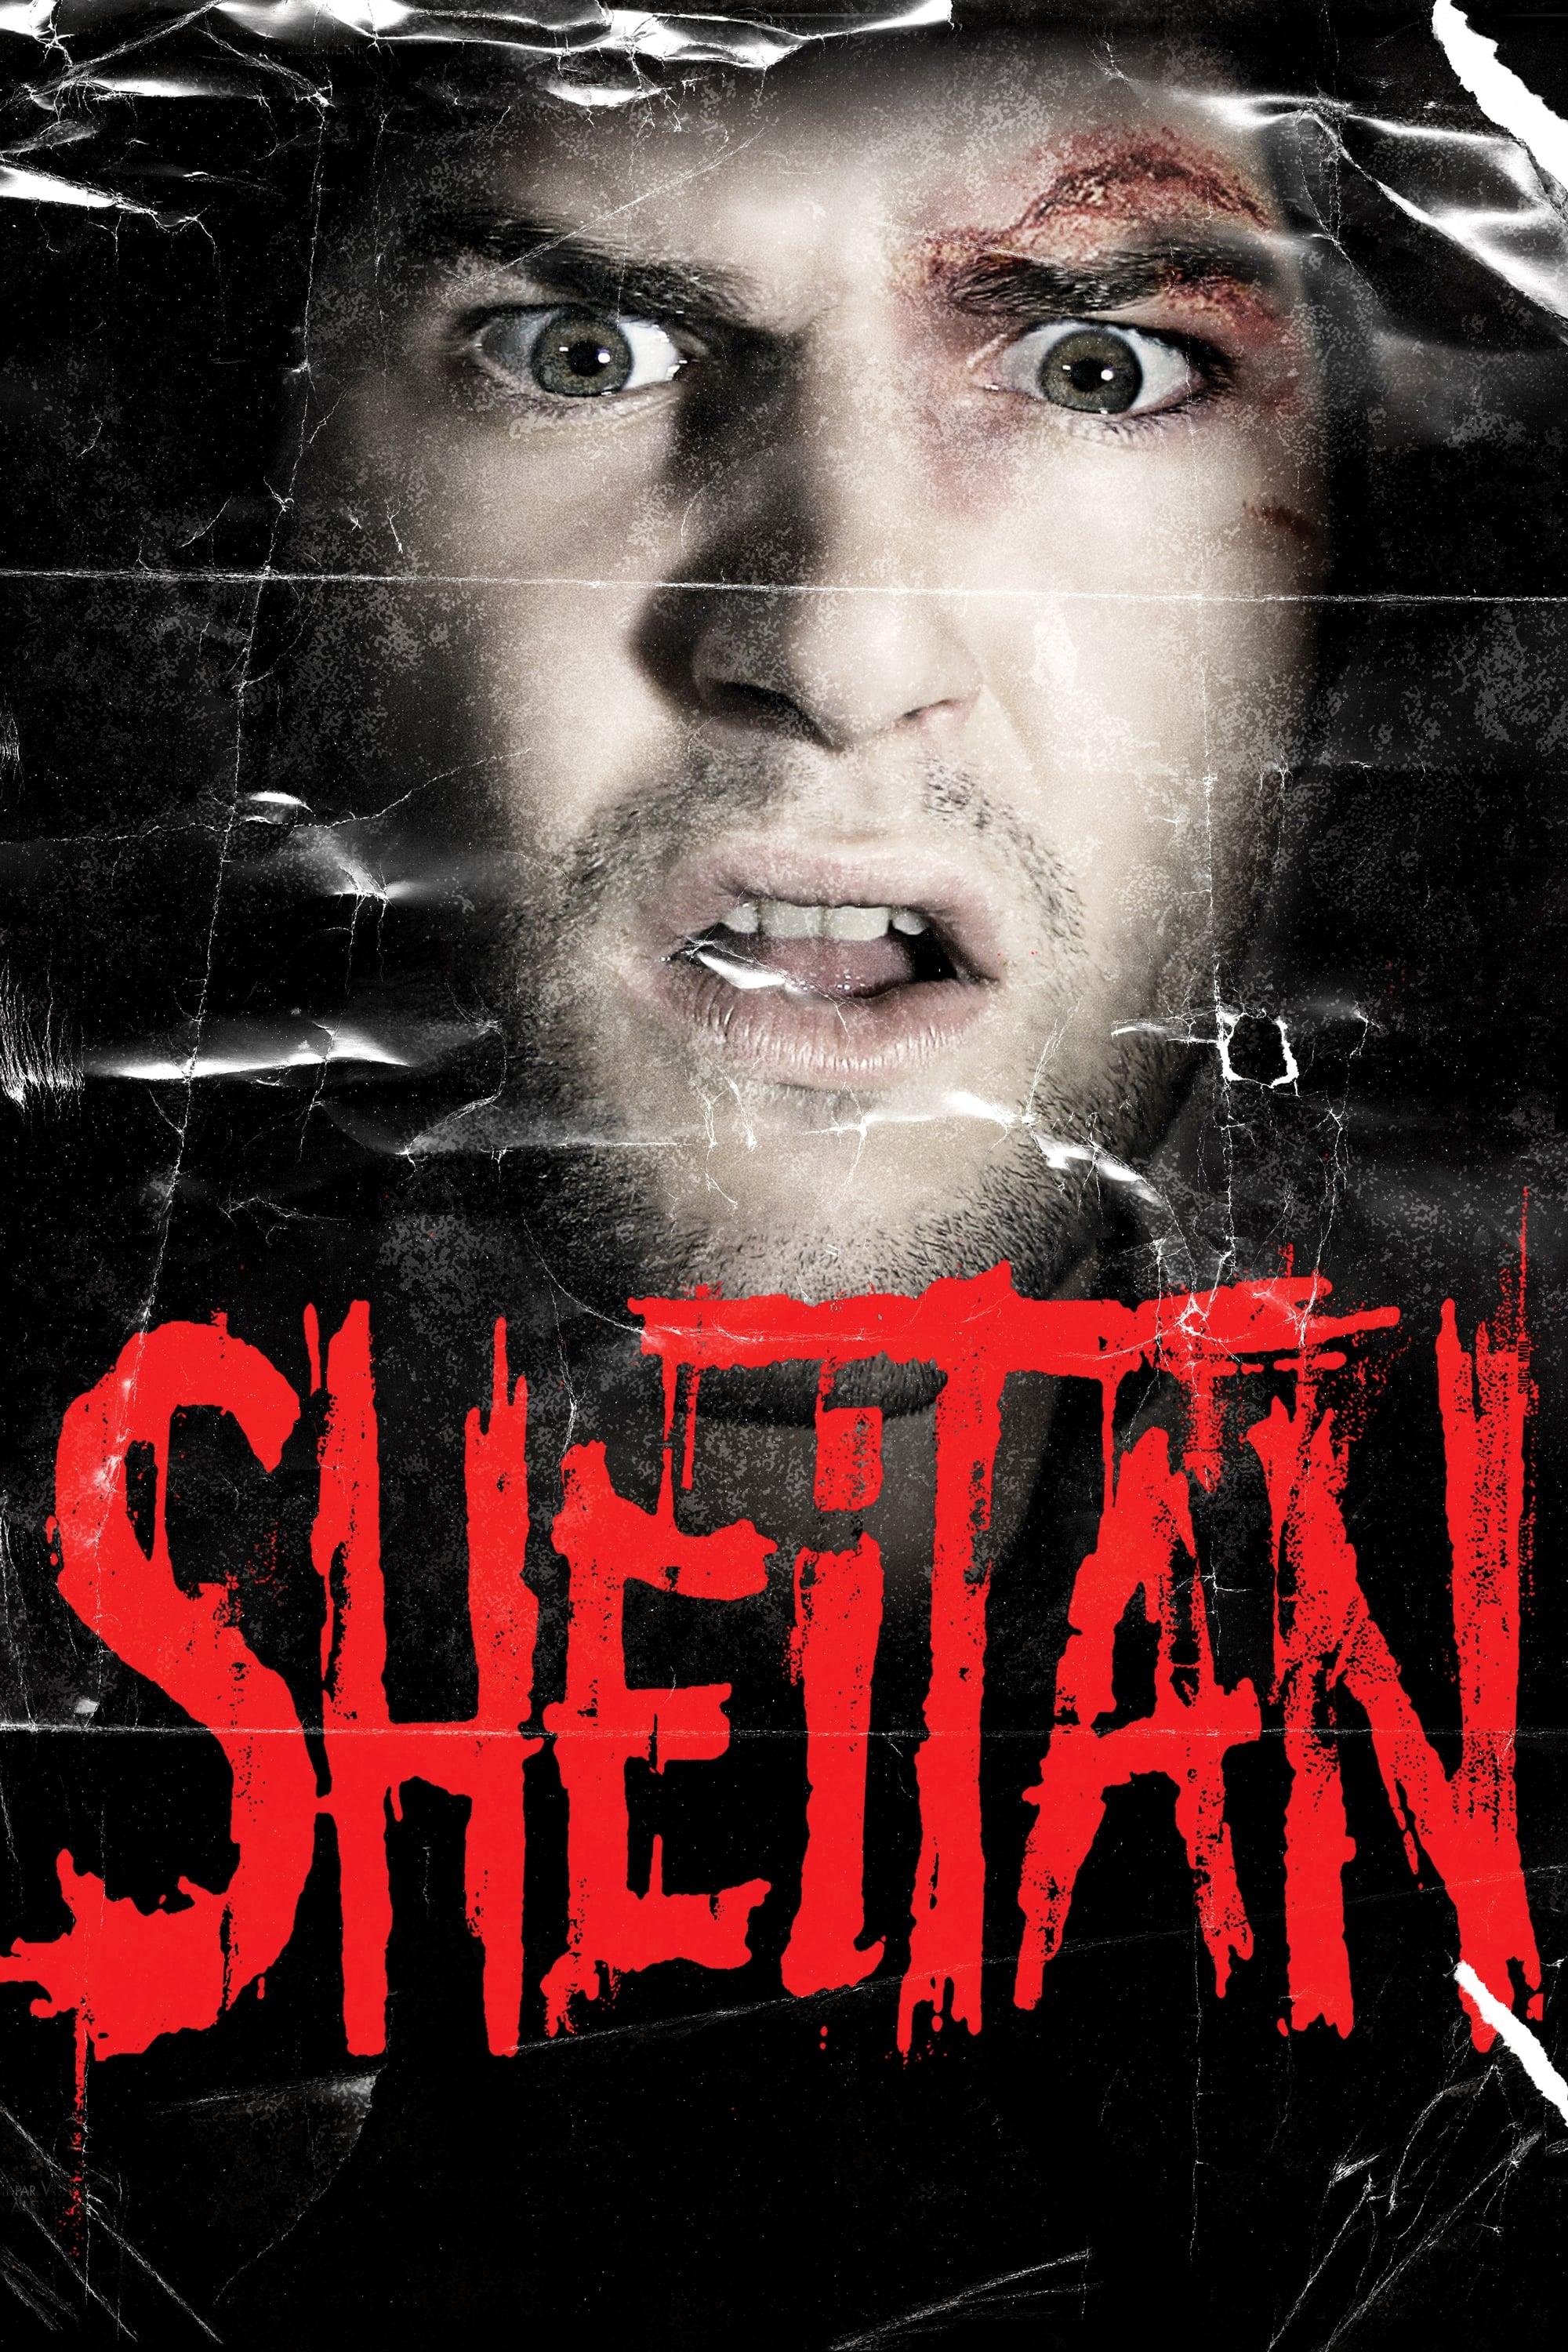 Sheitan poster